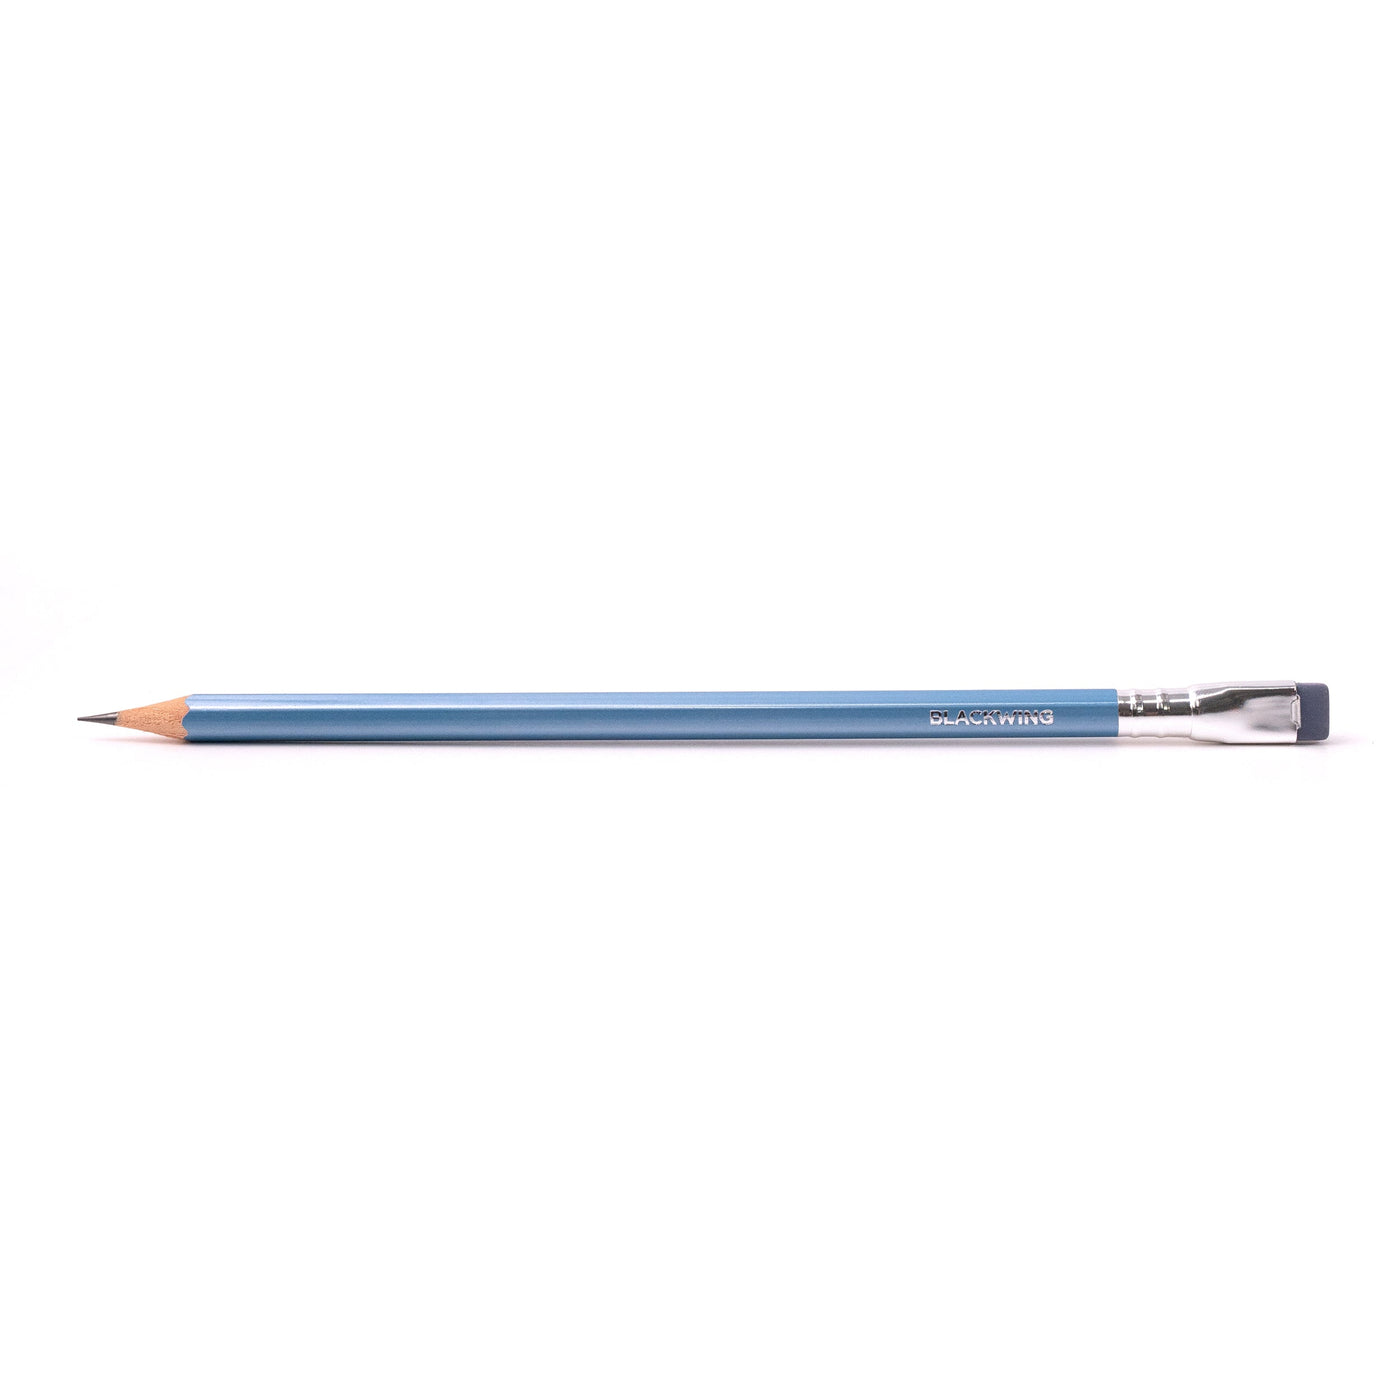 Blackwing Pearl Pencils: Blue (Set of 12)